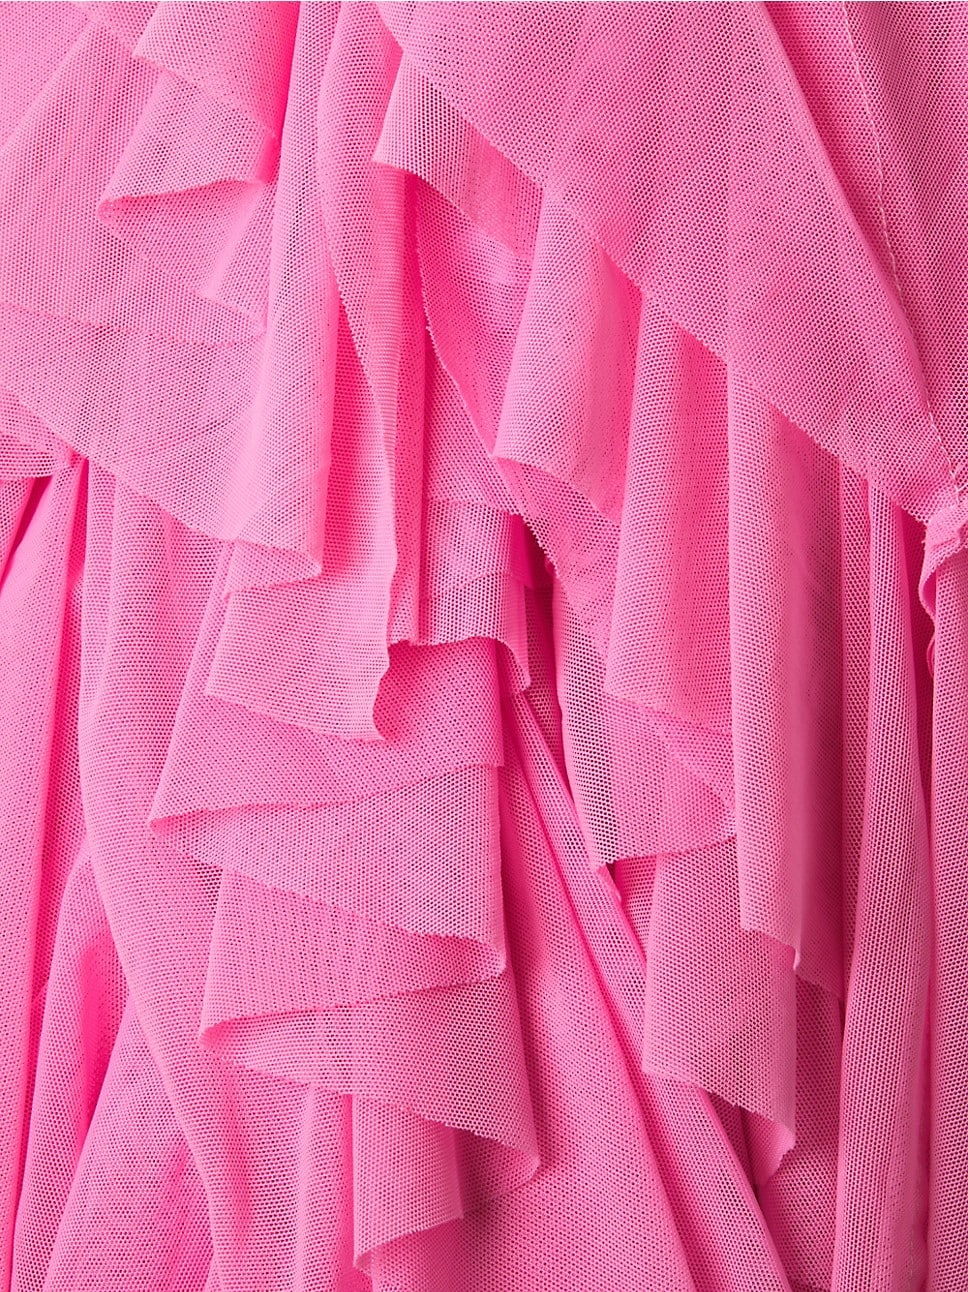 Norma Kamali Tara High-Low Ruffled Gown in Candy Pink